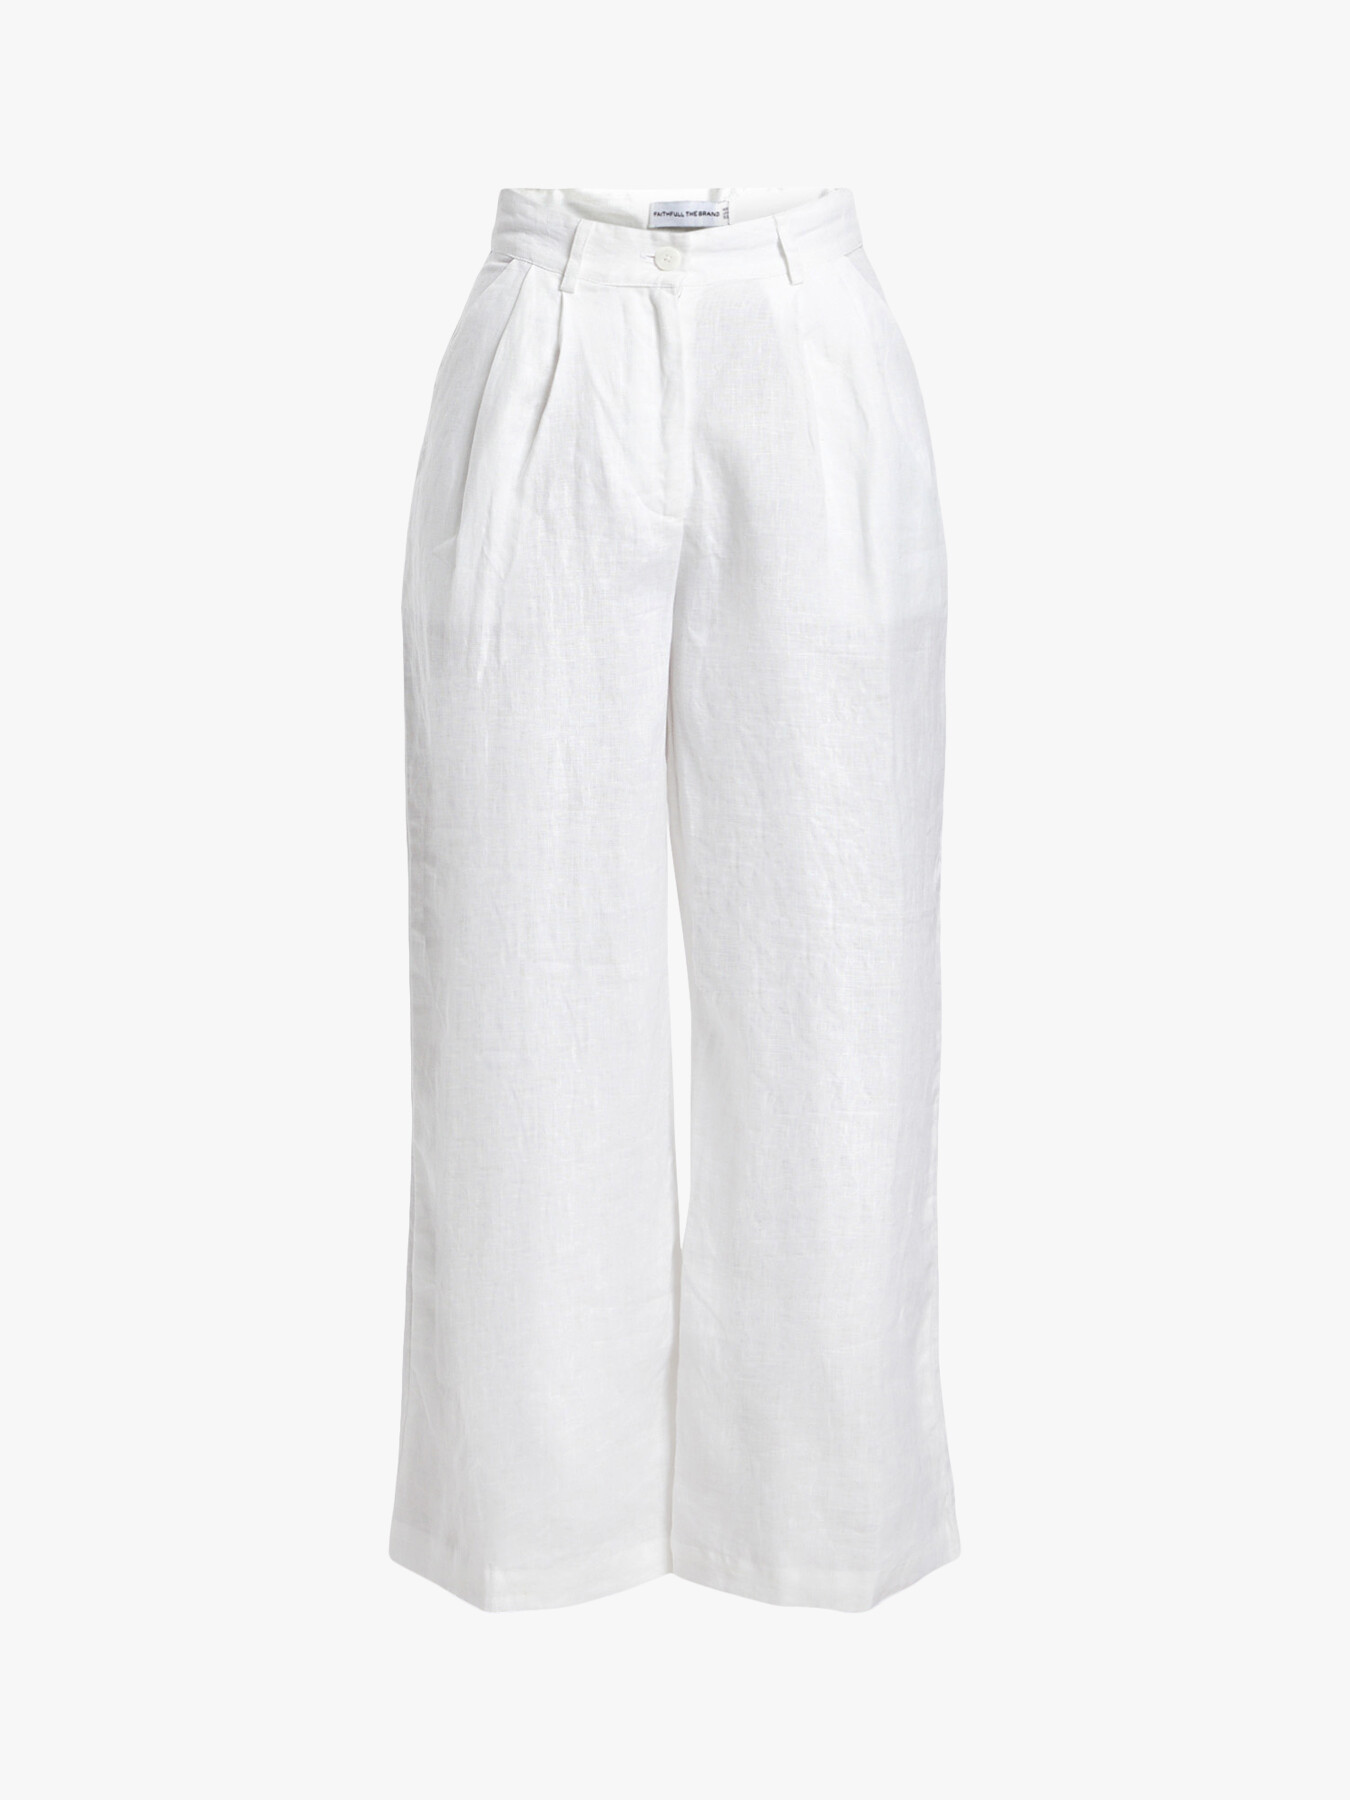 Circa Pants White - Faithfull the Brand